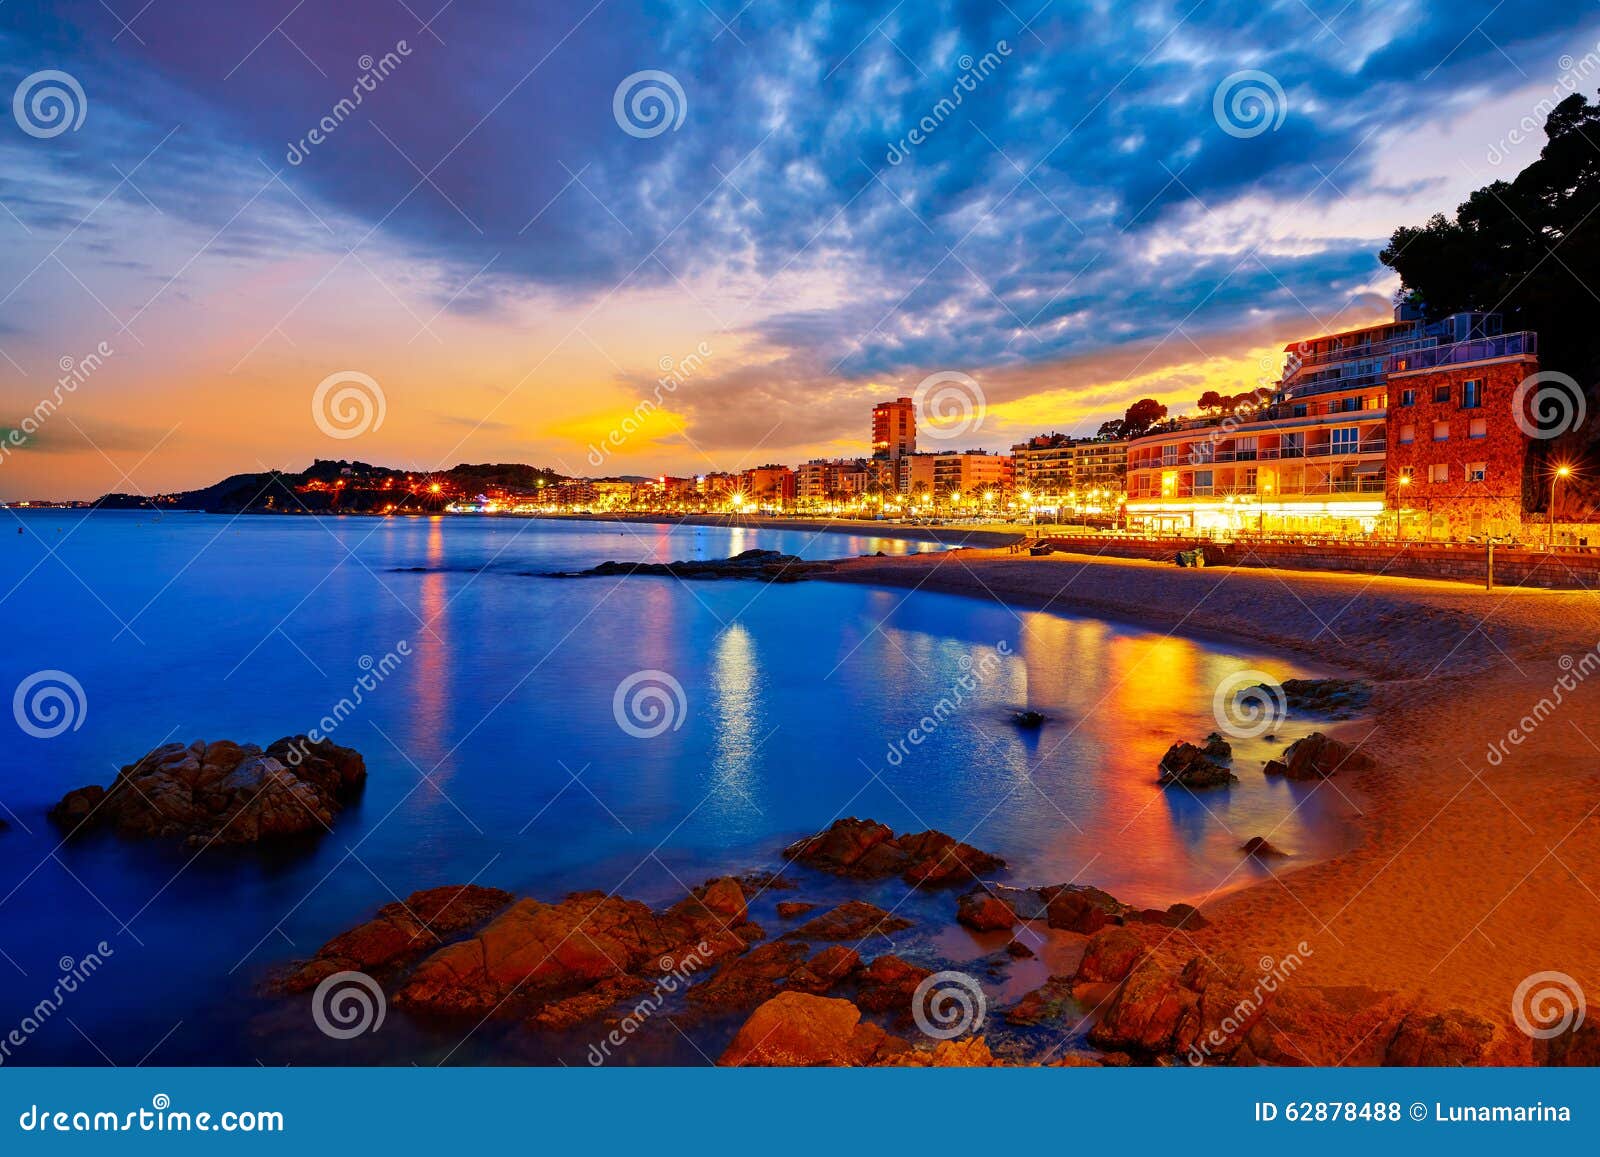 lloret de mar sunset at costa brava catalonia